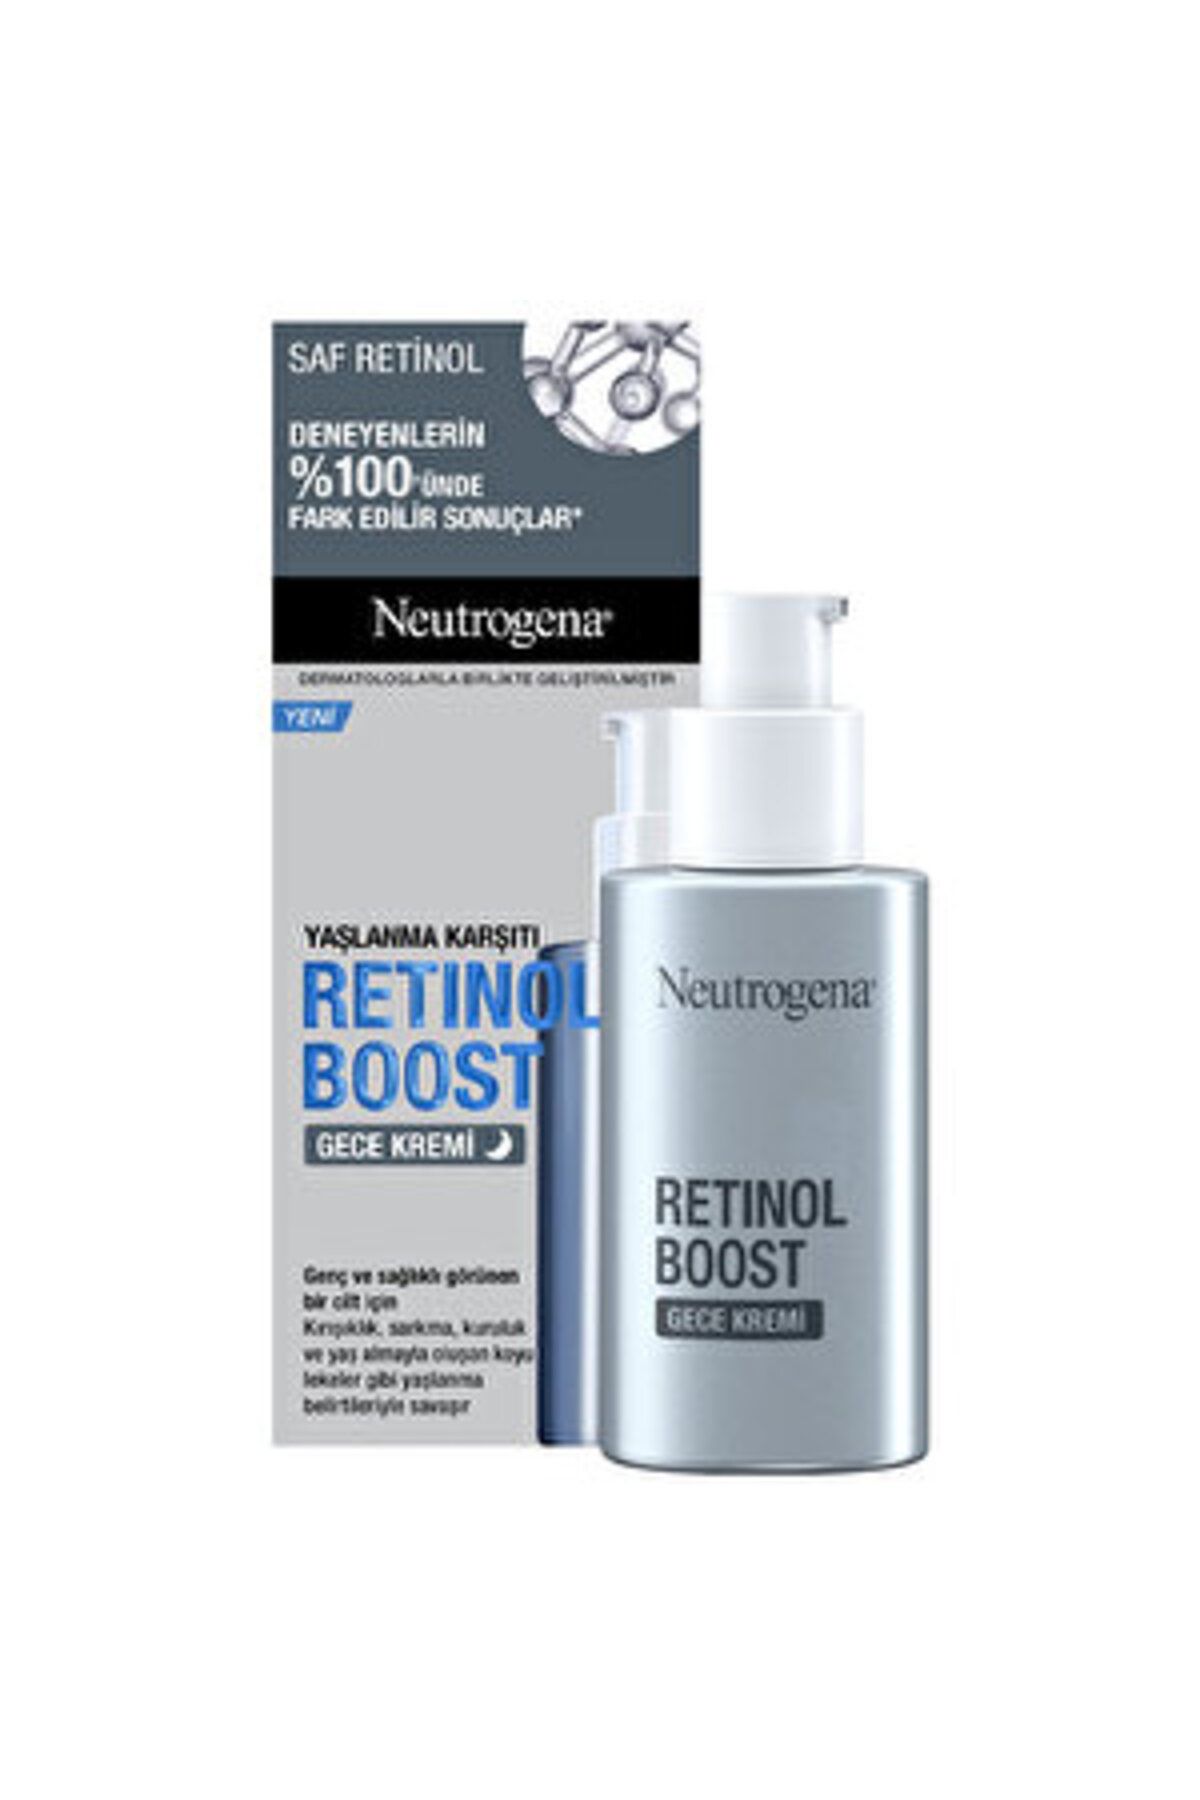 Neutrogena ( 3 ADET ) Neutrogena Retinol Boost Yaşlanma Karşıtı Gece Kremi 50 ml